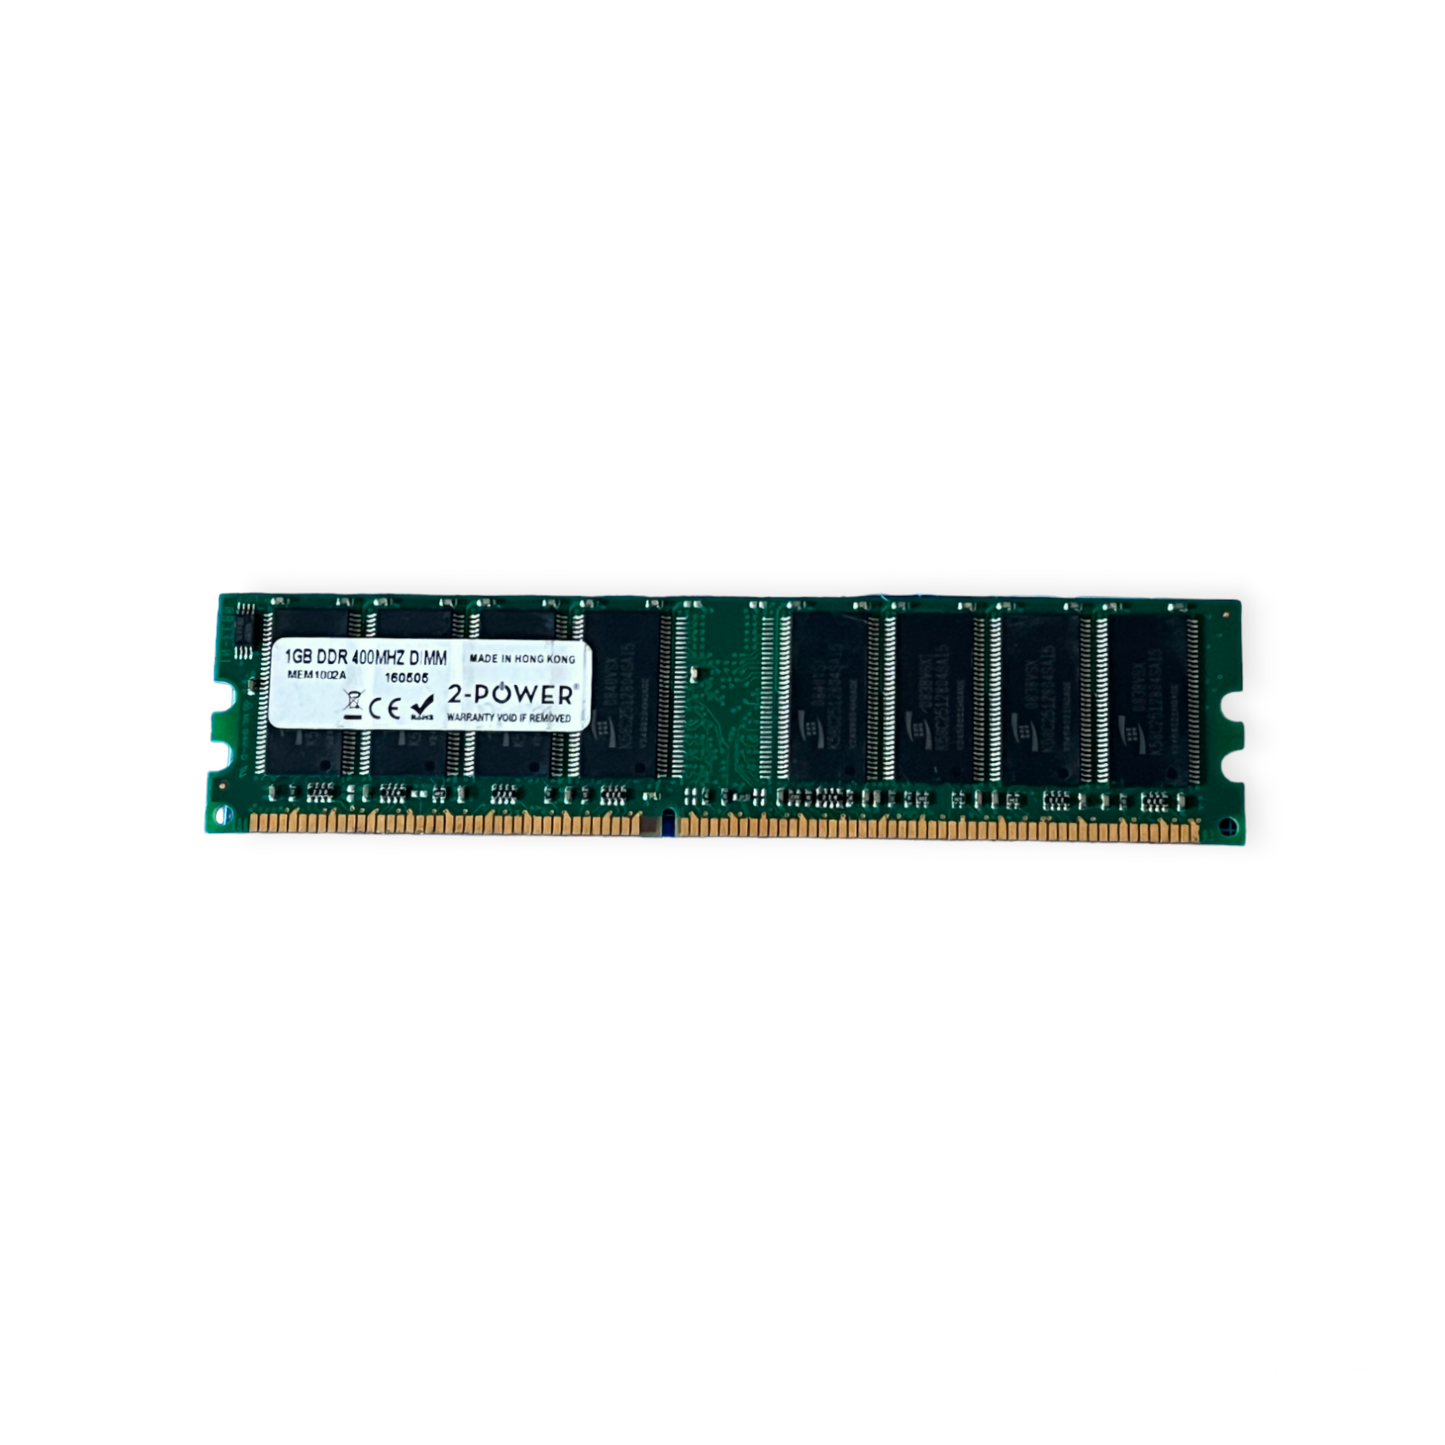 Memória Ram DIMM 2-Power 1GB DDR 400MHZ MEM1002A